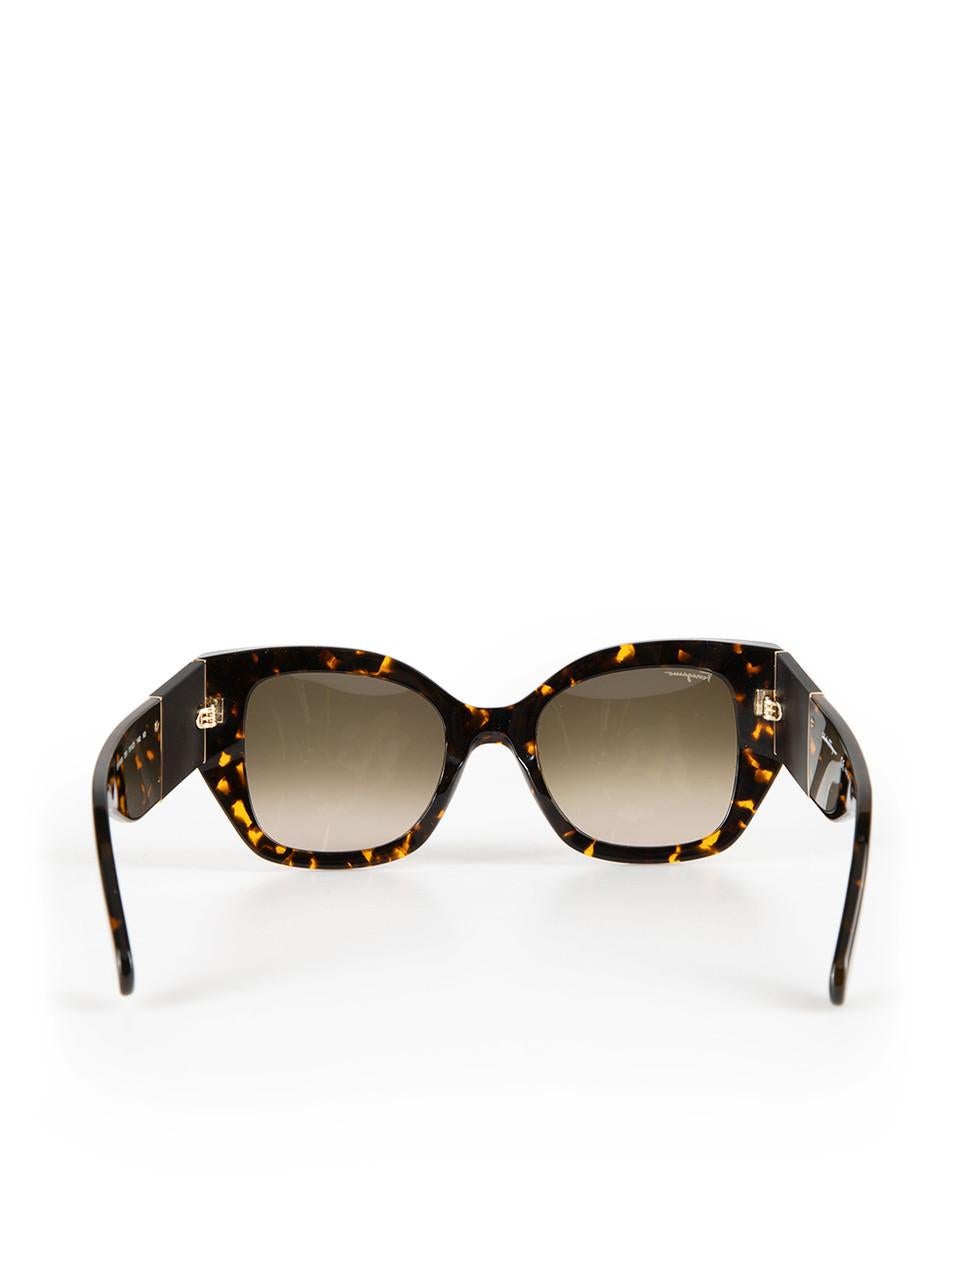 Women's Salvatore Ferragamo Vintage Tortoise Square Frame Sunglasses For Sale